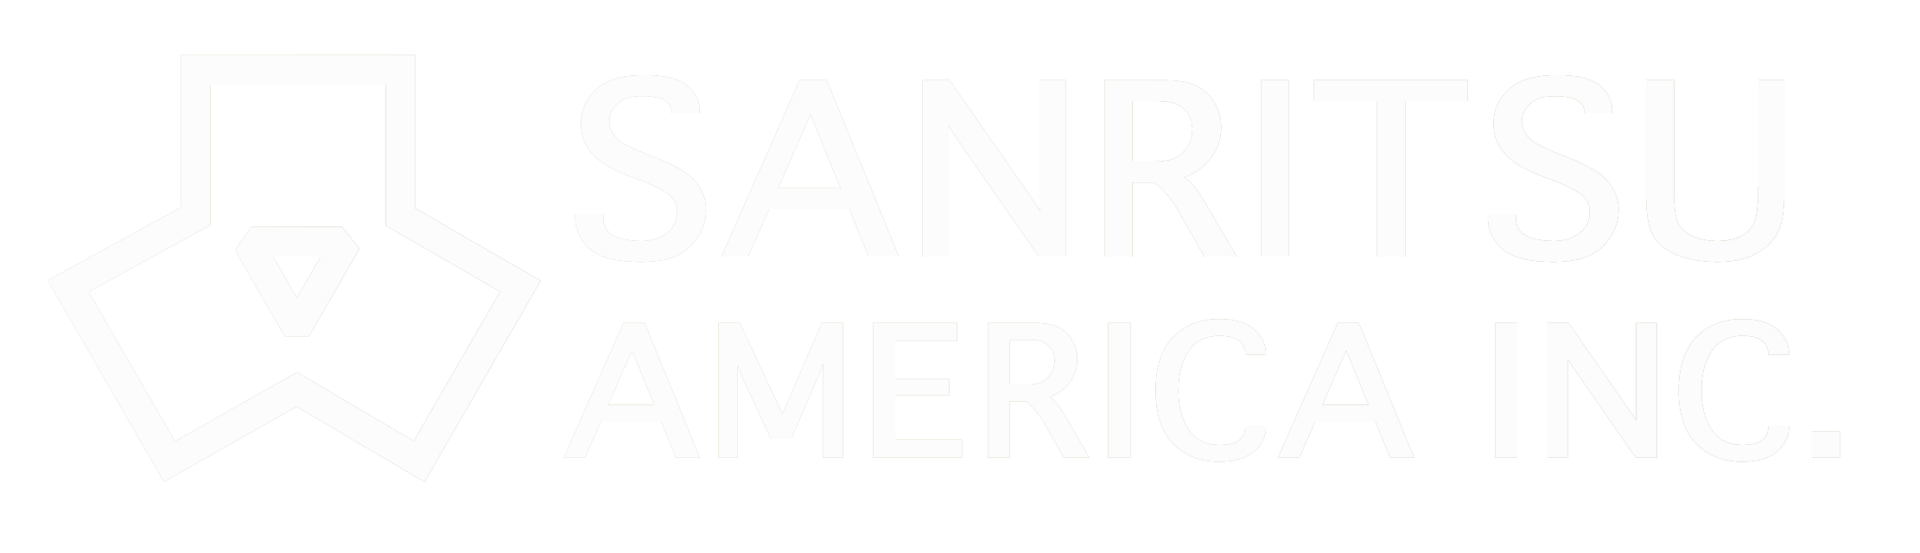 Sanritsu America inc